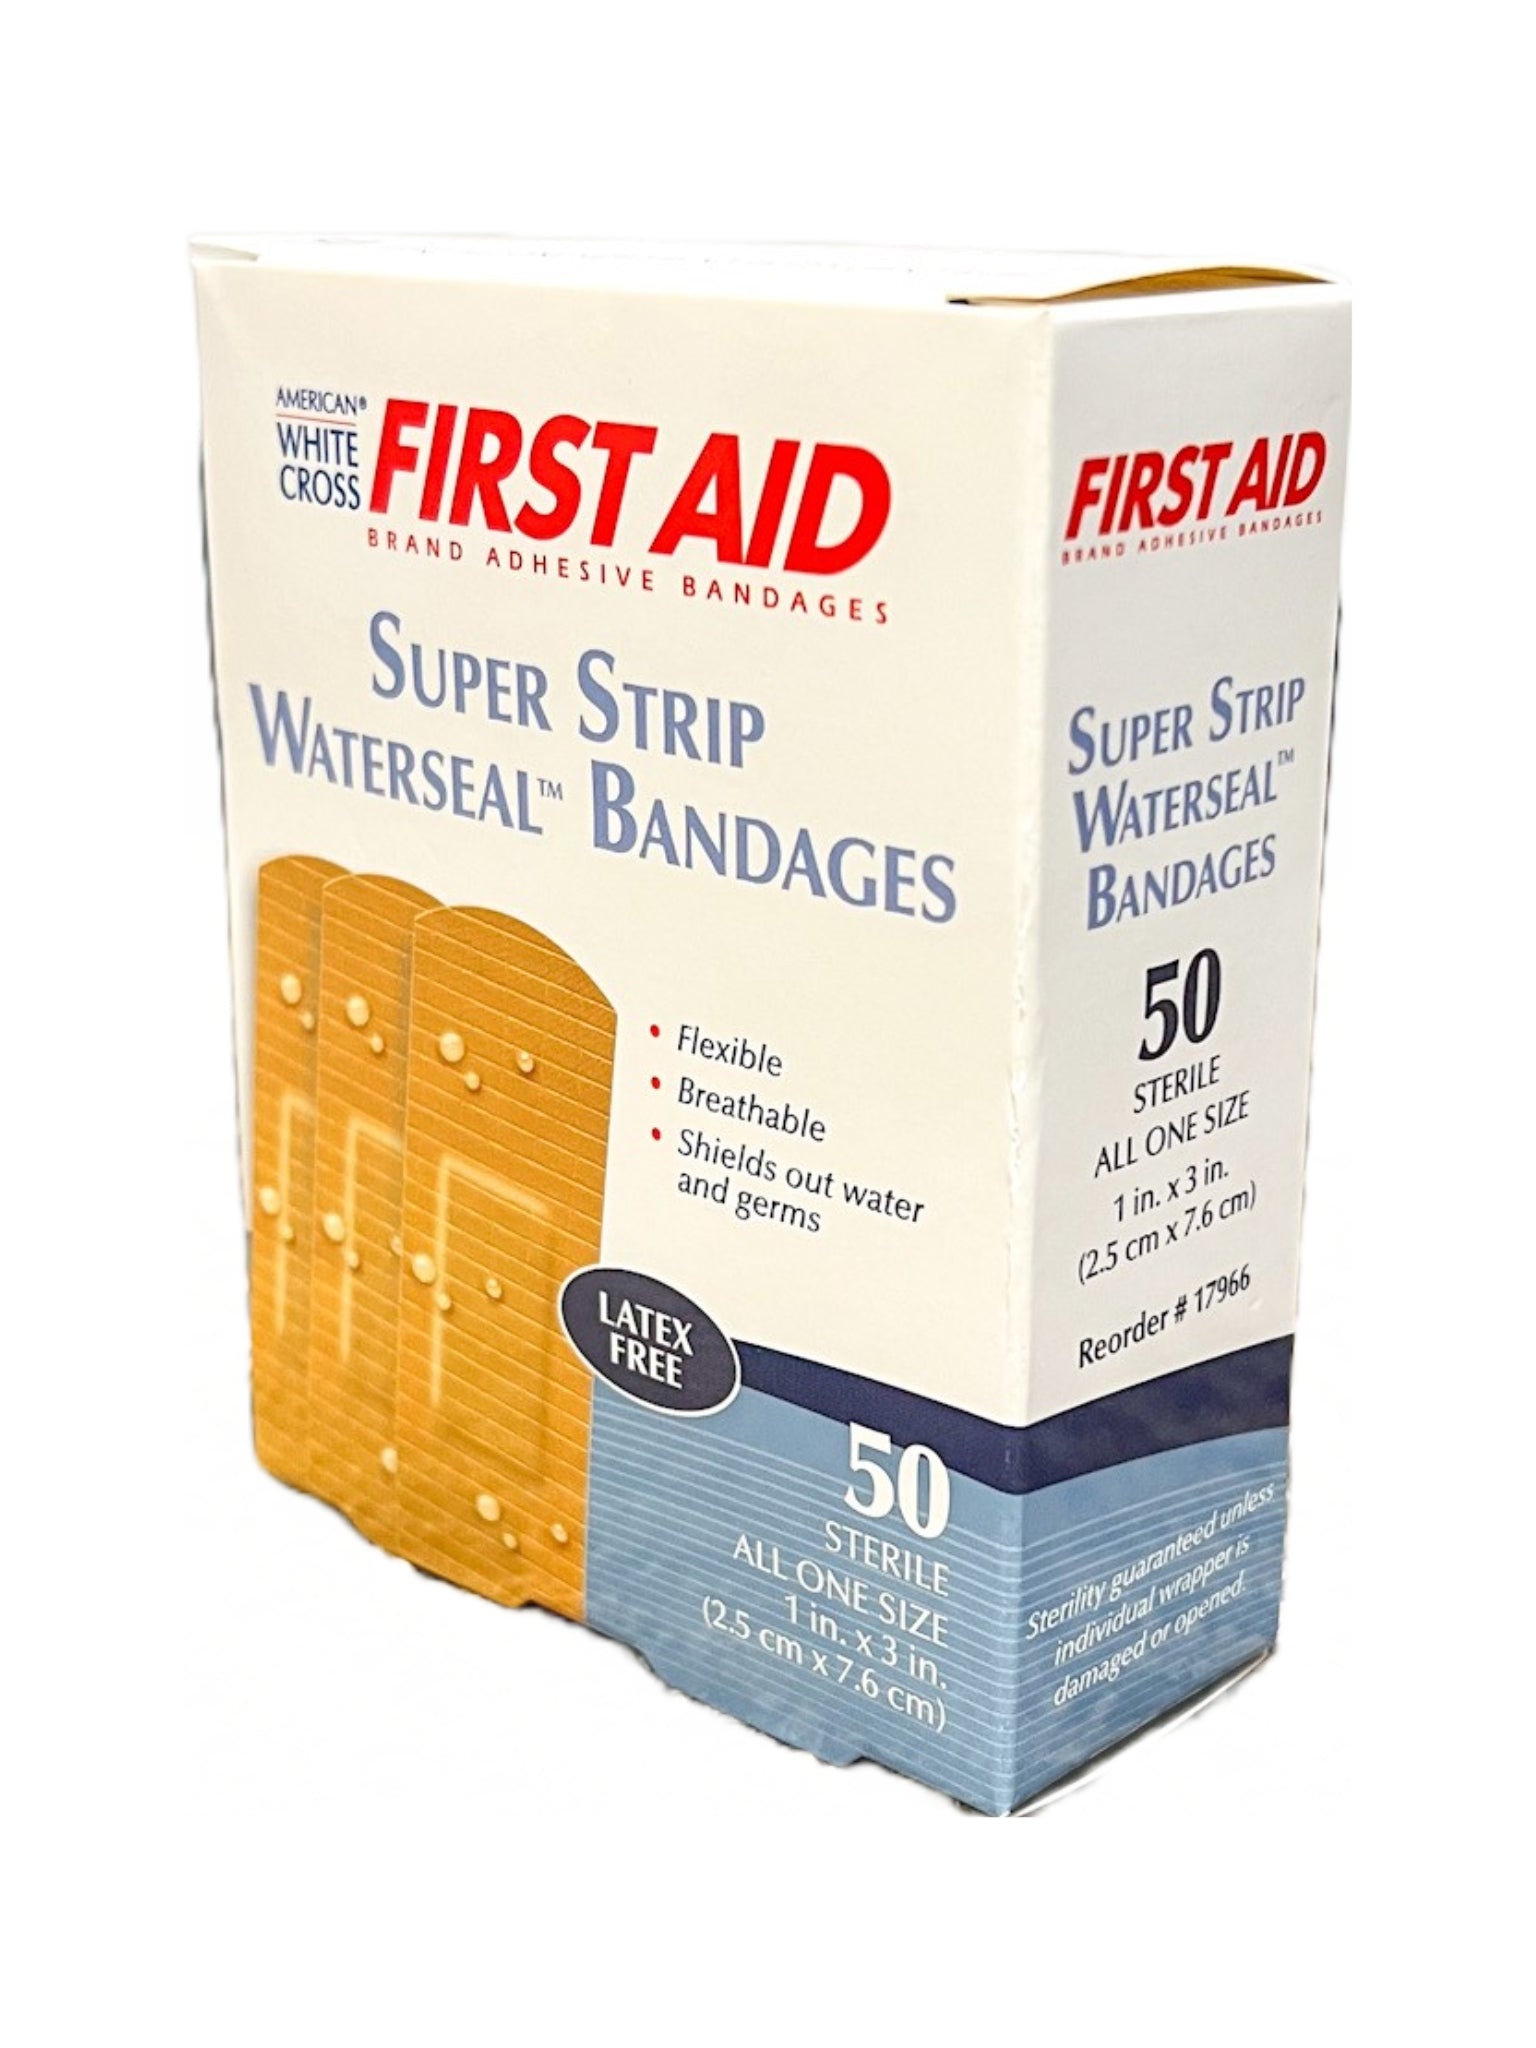 Dukal DER 17966 Fabric Waterseal Adhesive Bandage, Super Strip, Sterile, Tan, 1" x 3" (Pack of 50)